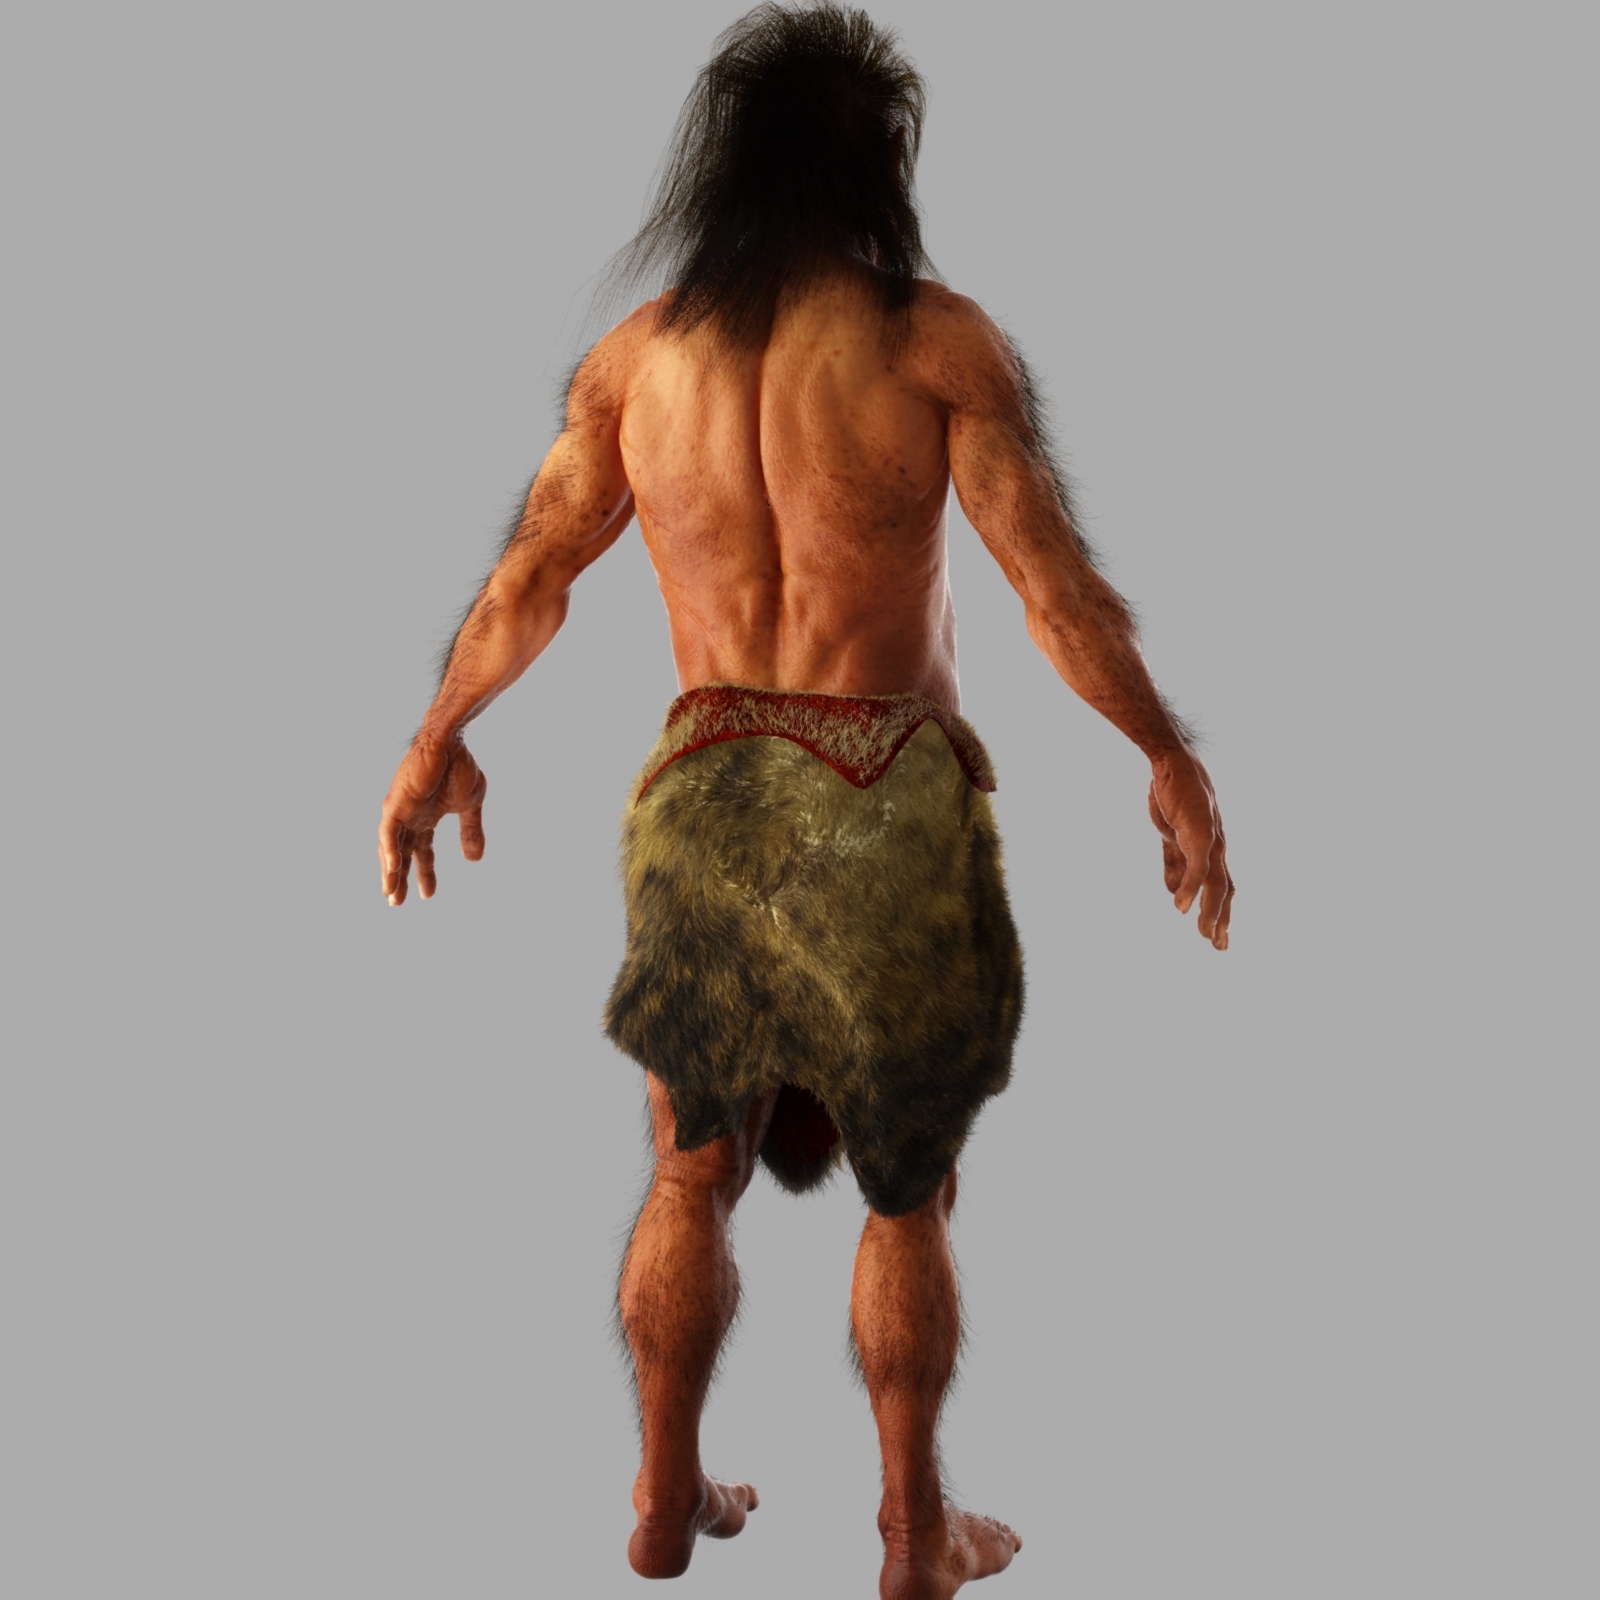 Neanderthal Man 3d Max